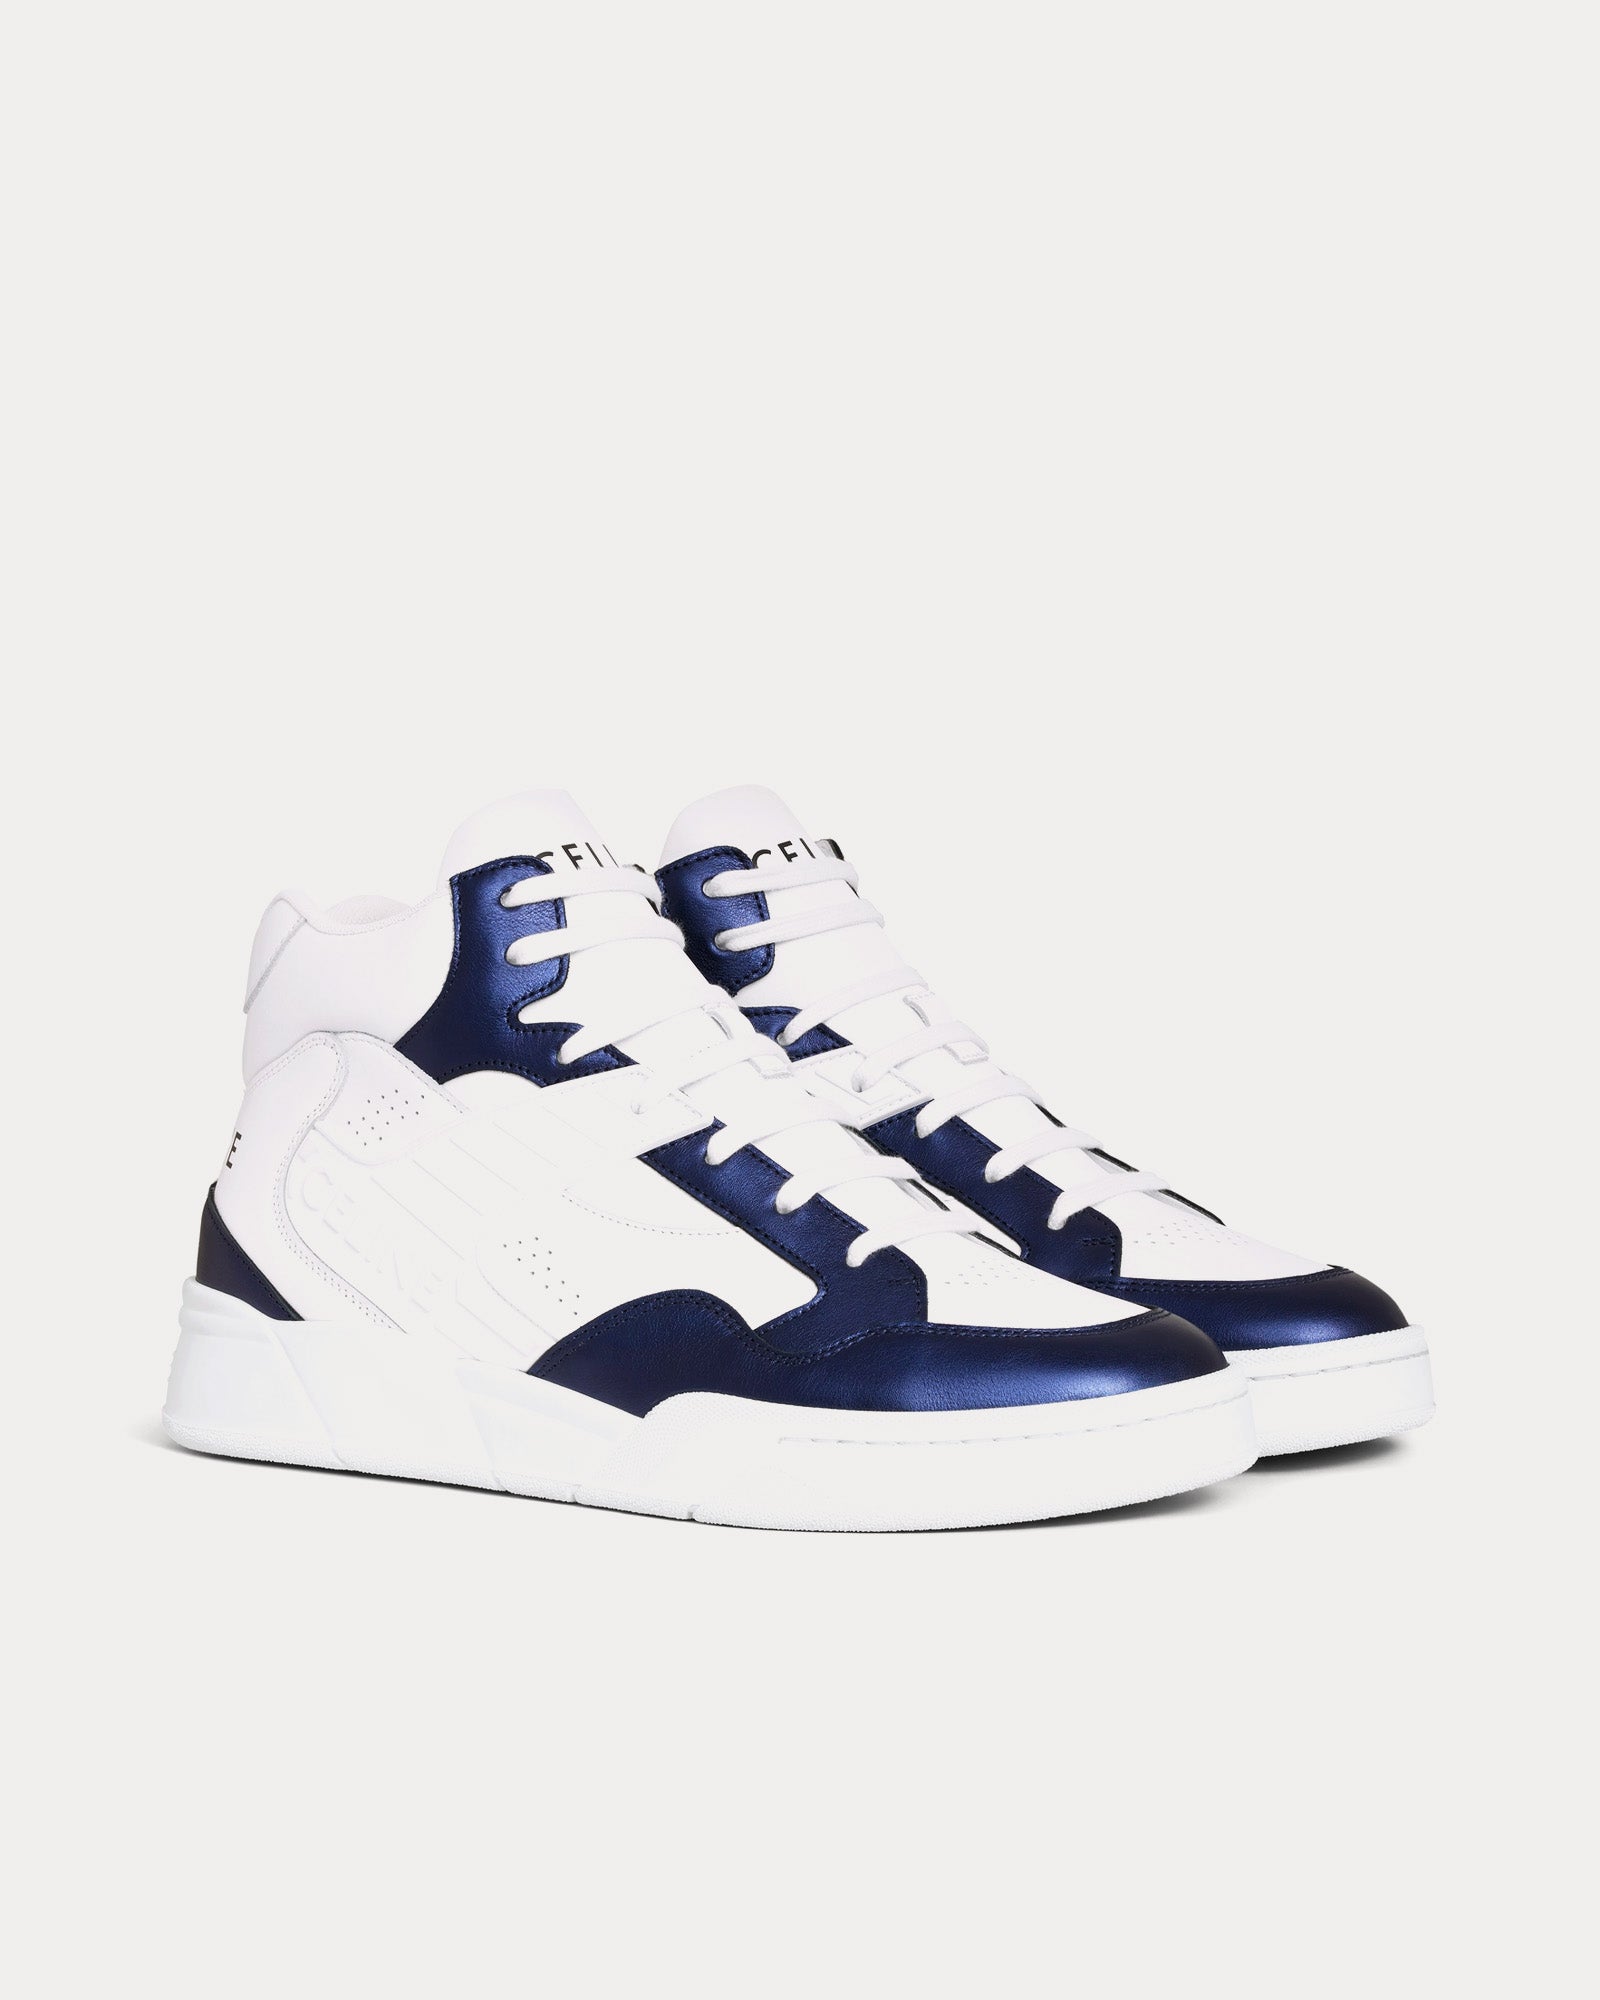 Celine - CT-06 Calfskin & Metallic Calfskin Optic White / Blue High Top Sneakers